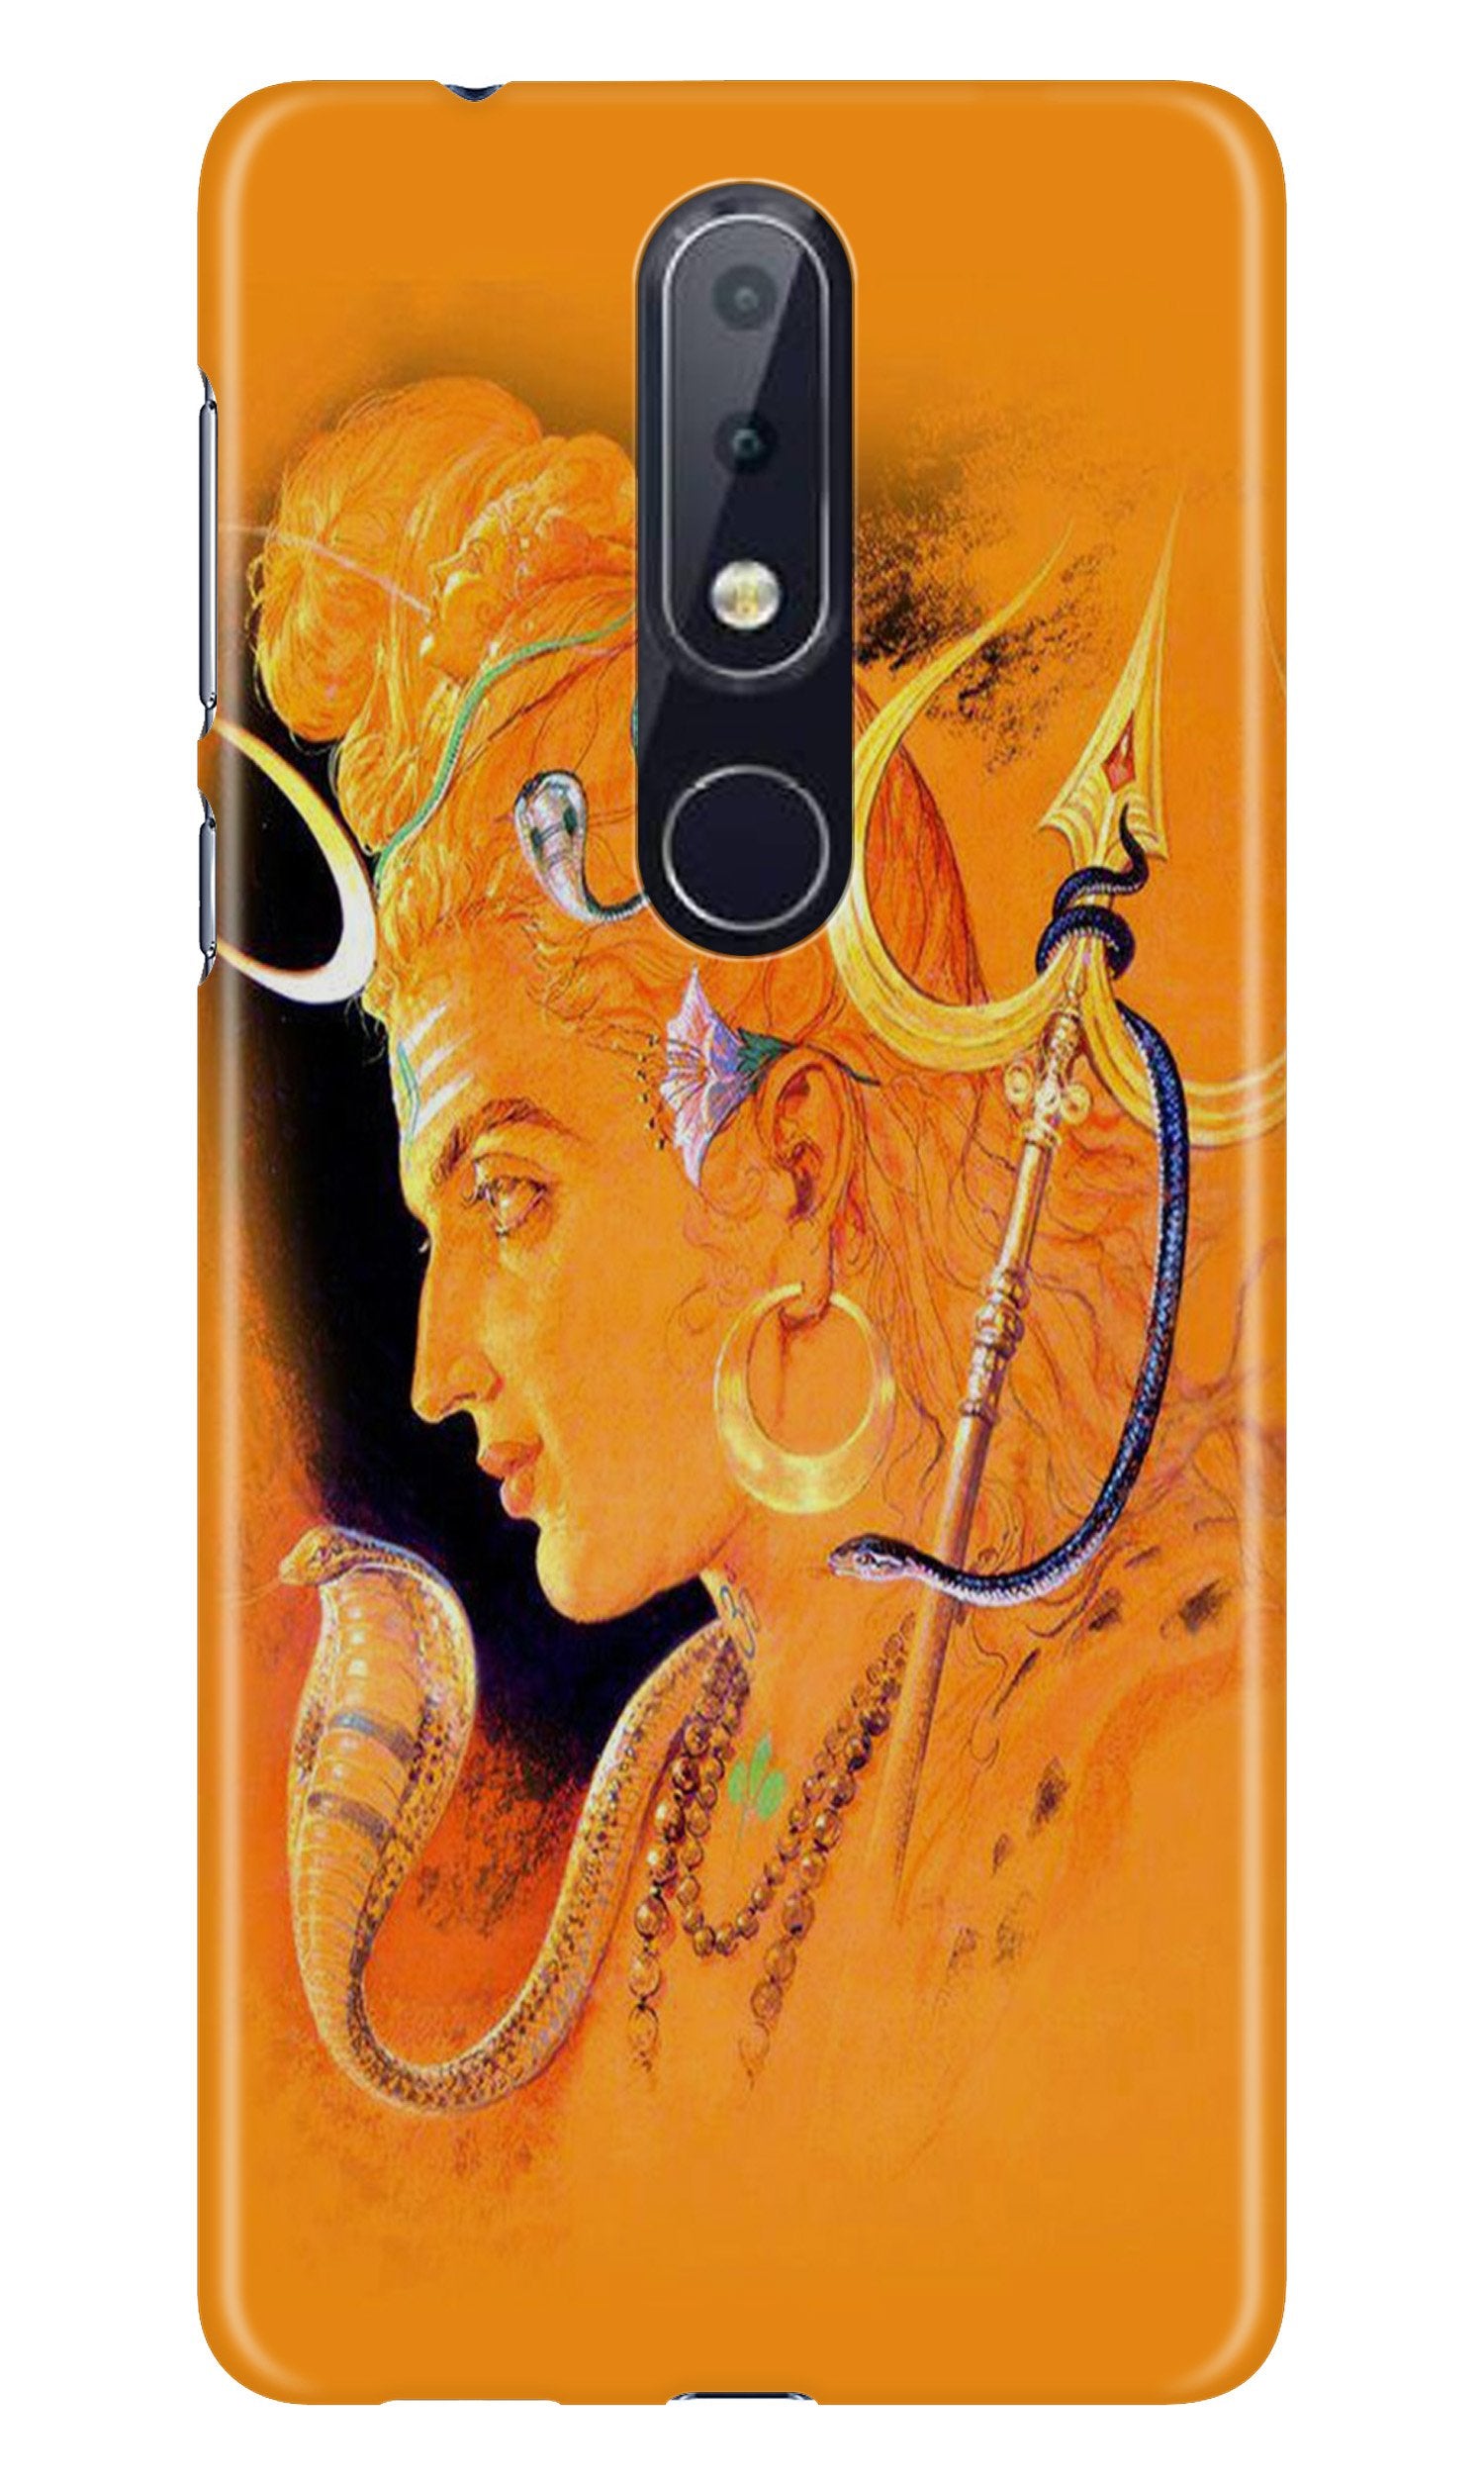 Lord Shiva Case for Nokia 7.1 (Design No. 293)